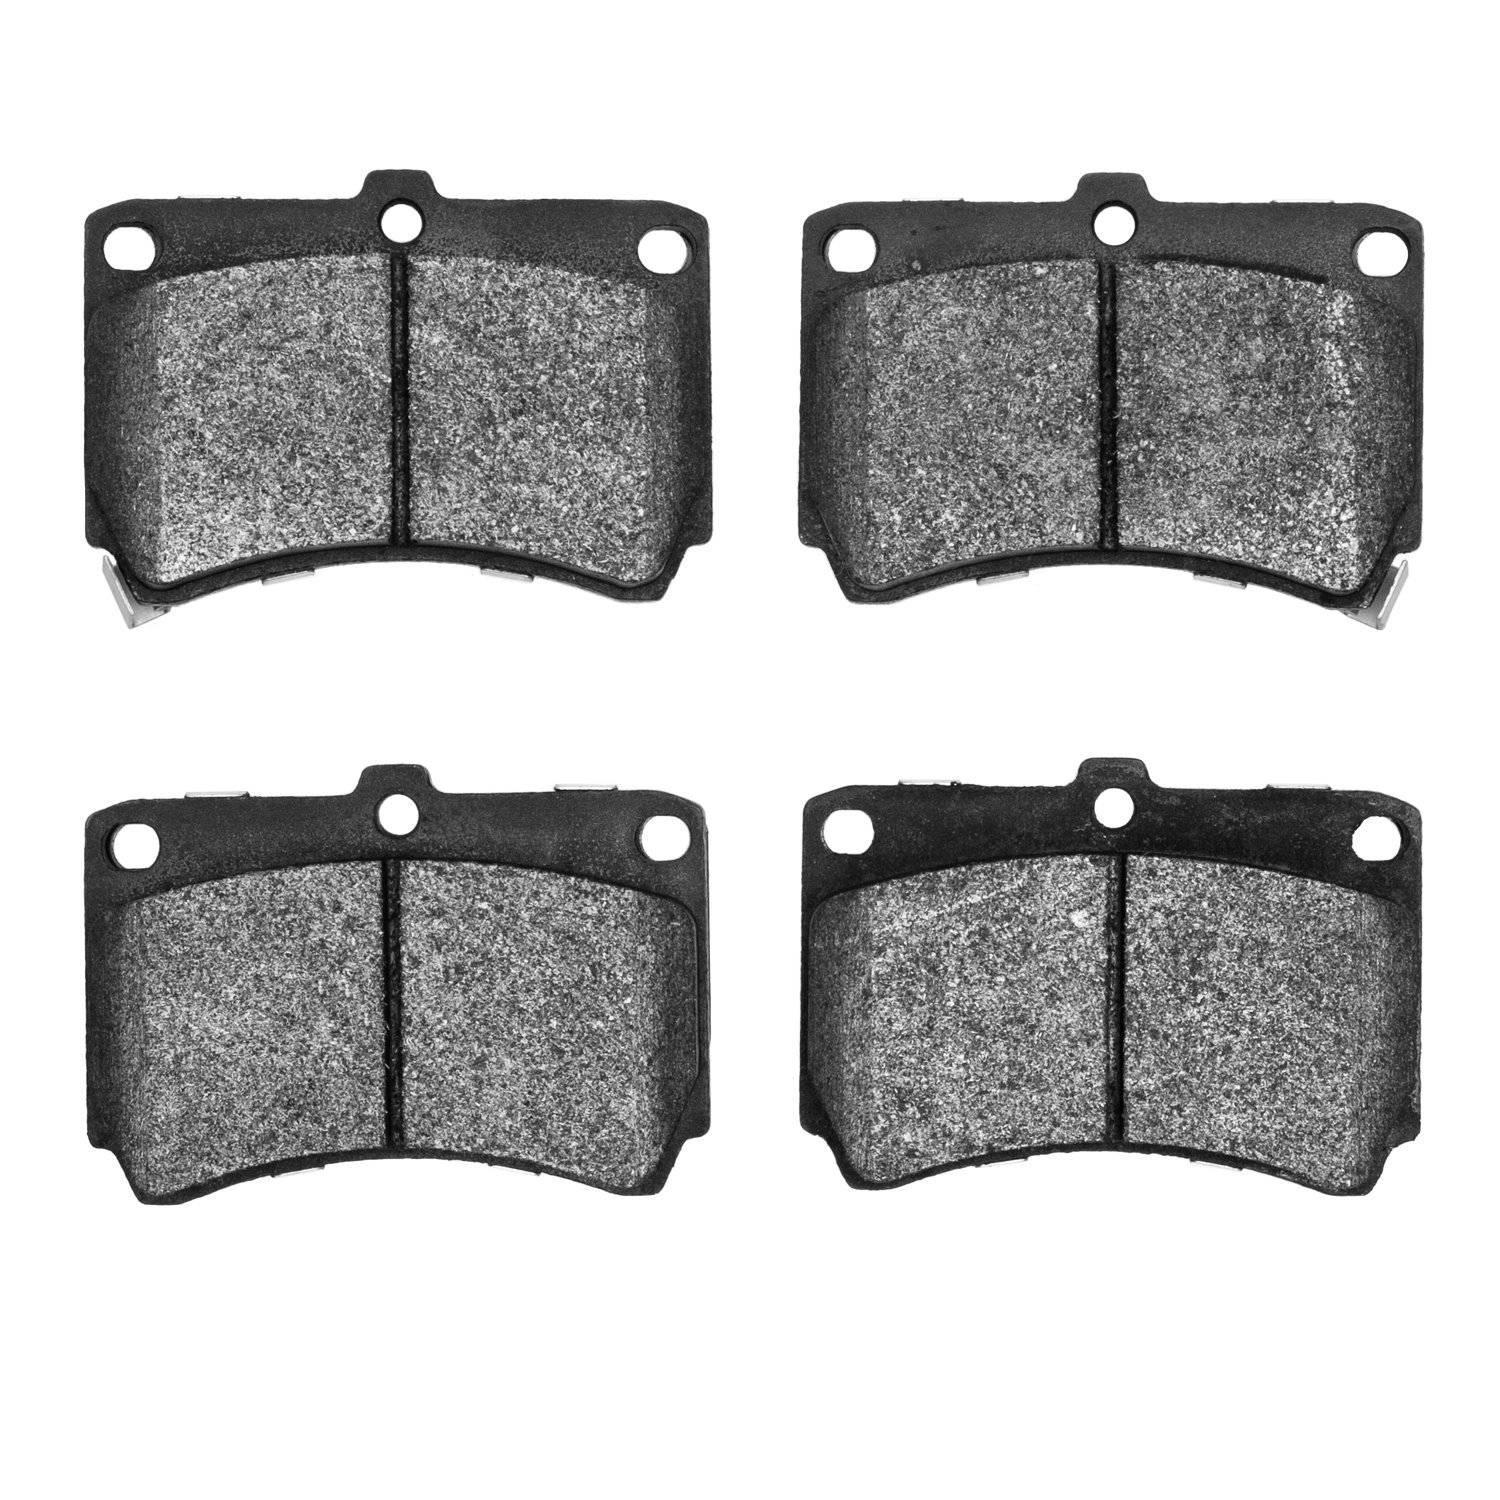 1310-0466-00 3000-Series Ceramic Brake Pads, 1990-2002 Multiple Makes/Models, Position: Front